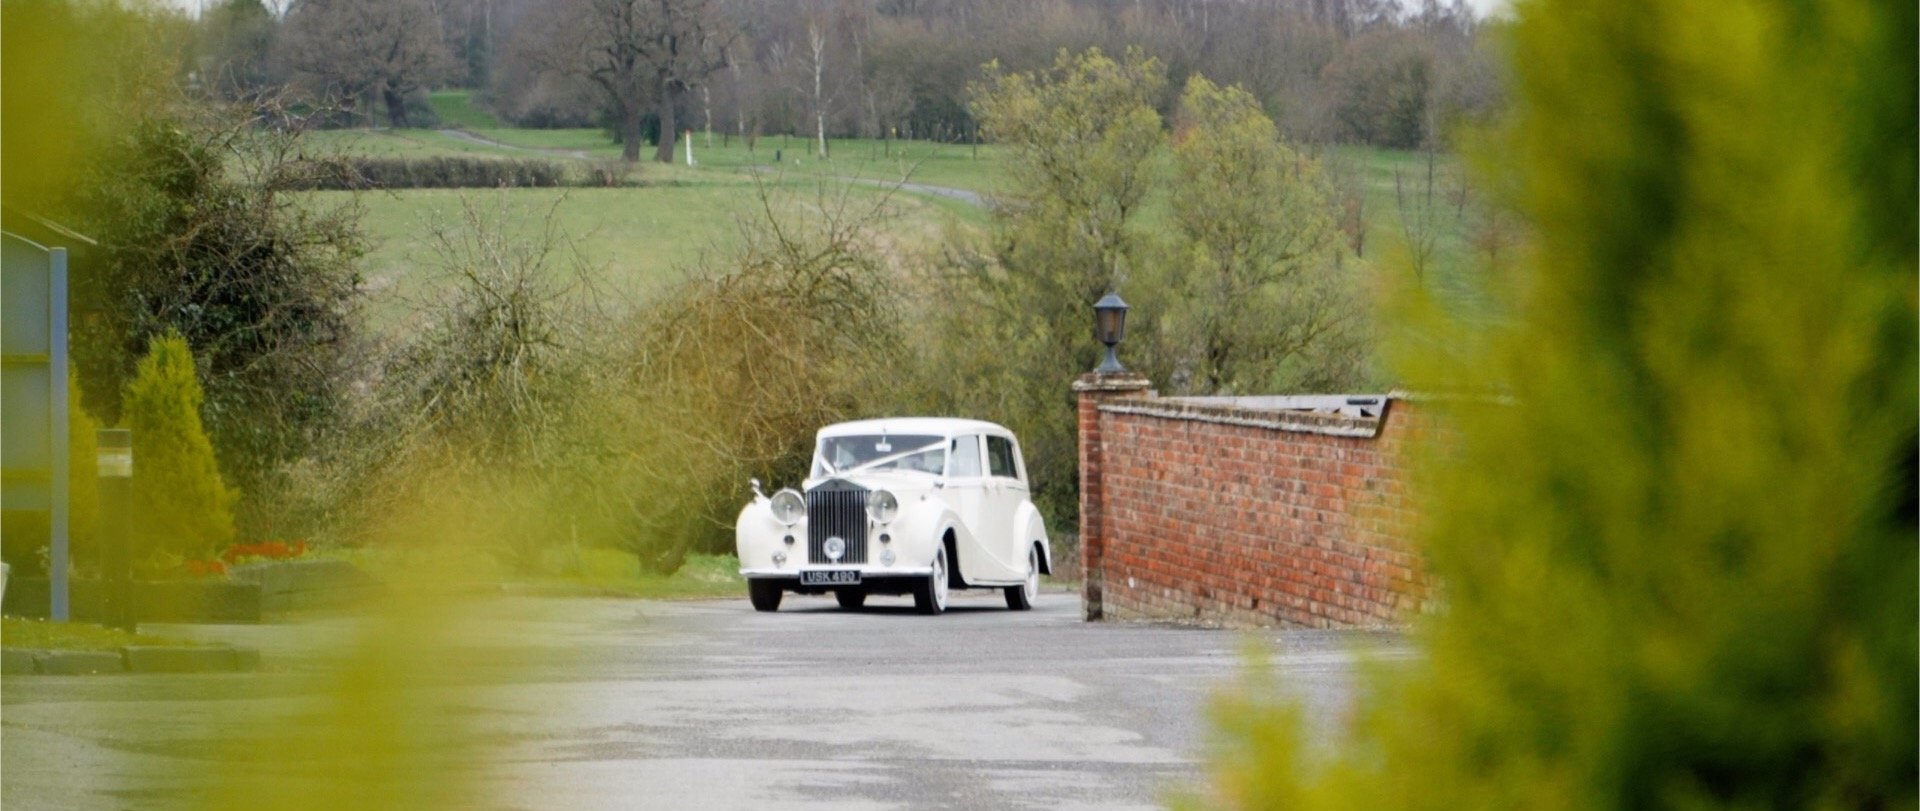 Wedding car at Crondon Park Essex Video.jpg